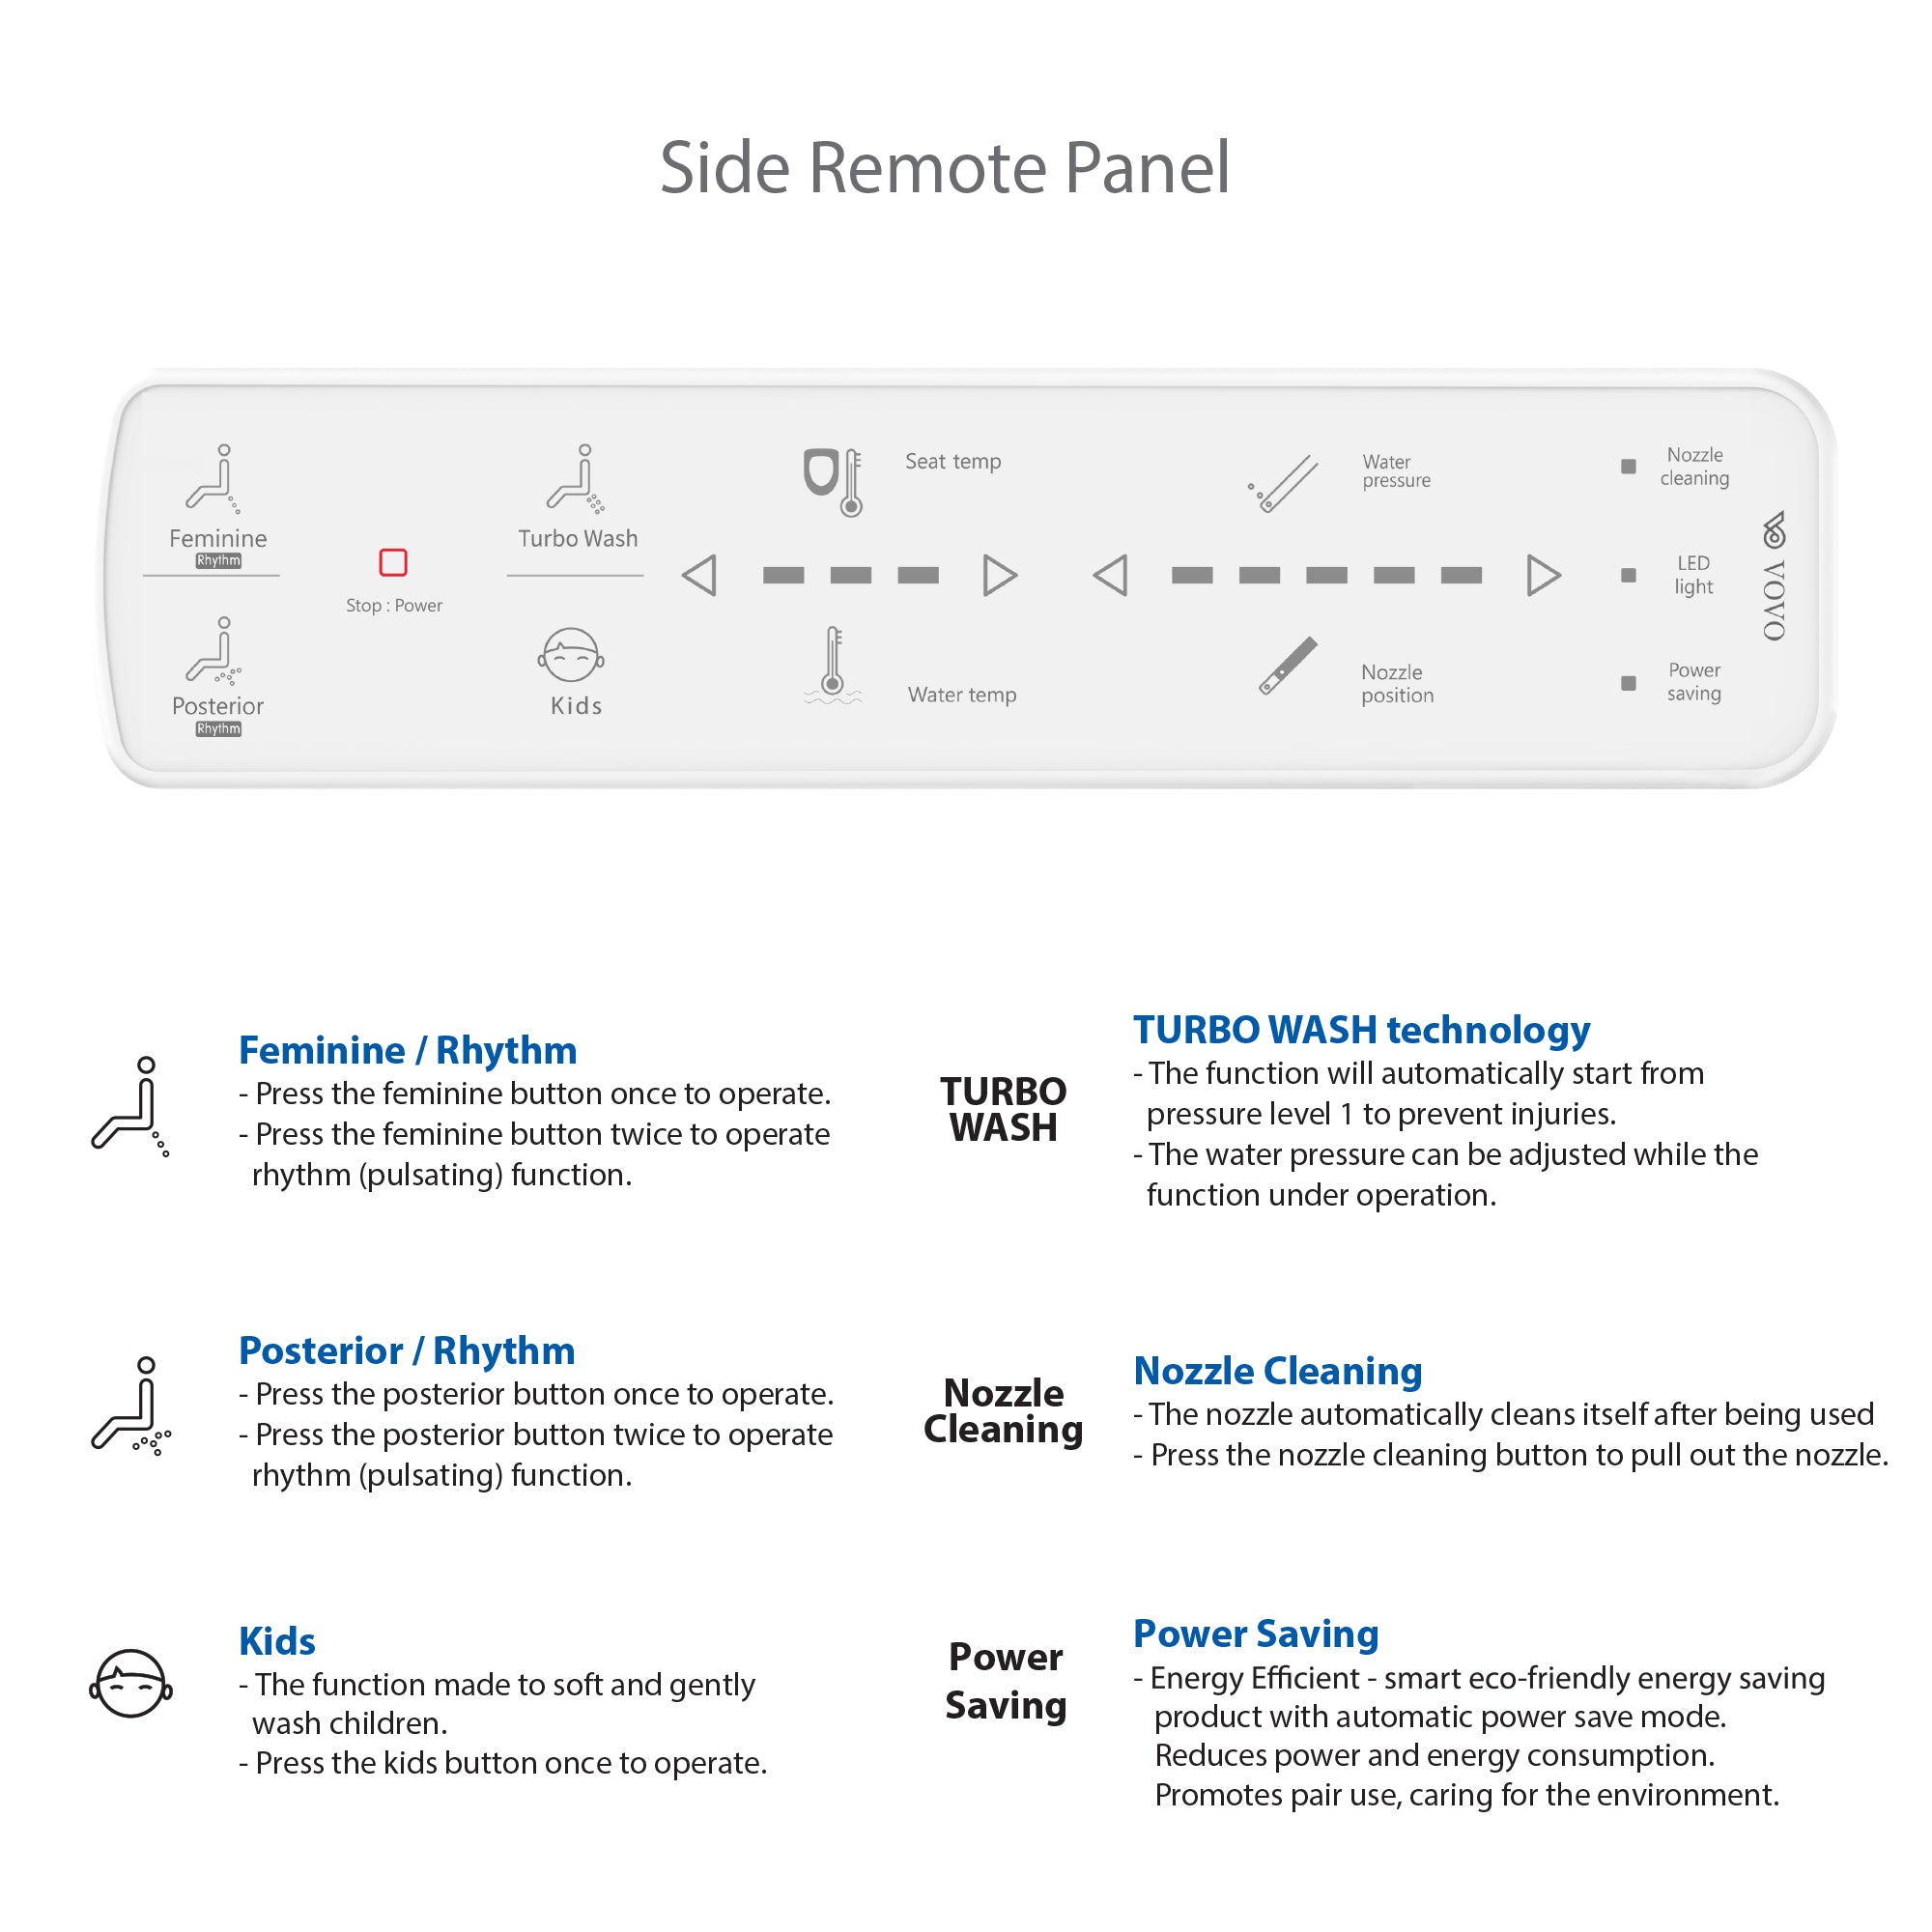 VB-5000 Side Remote Panel